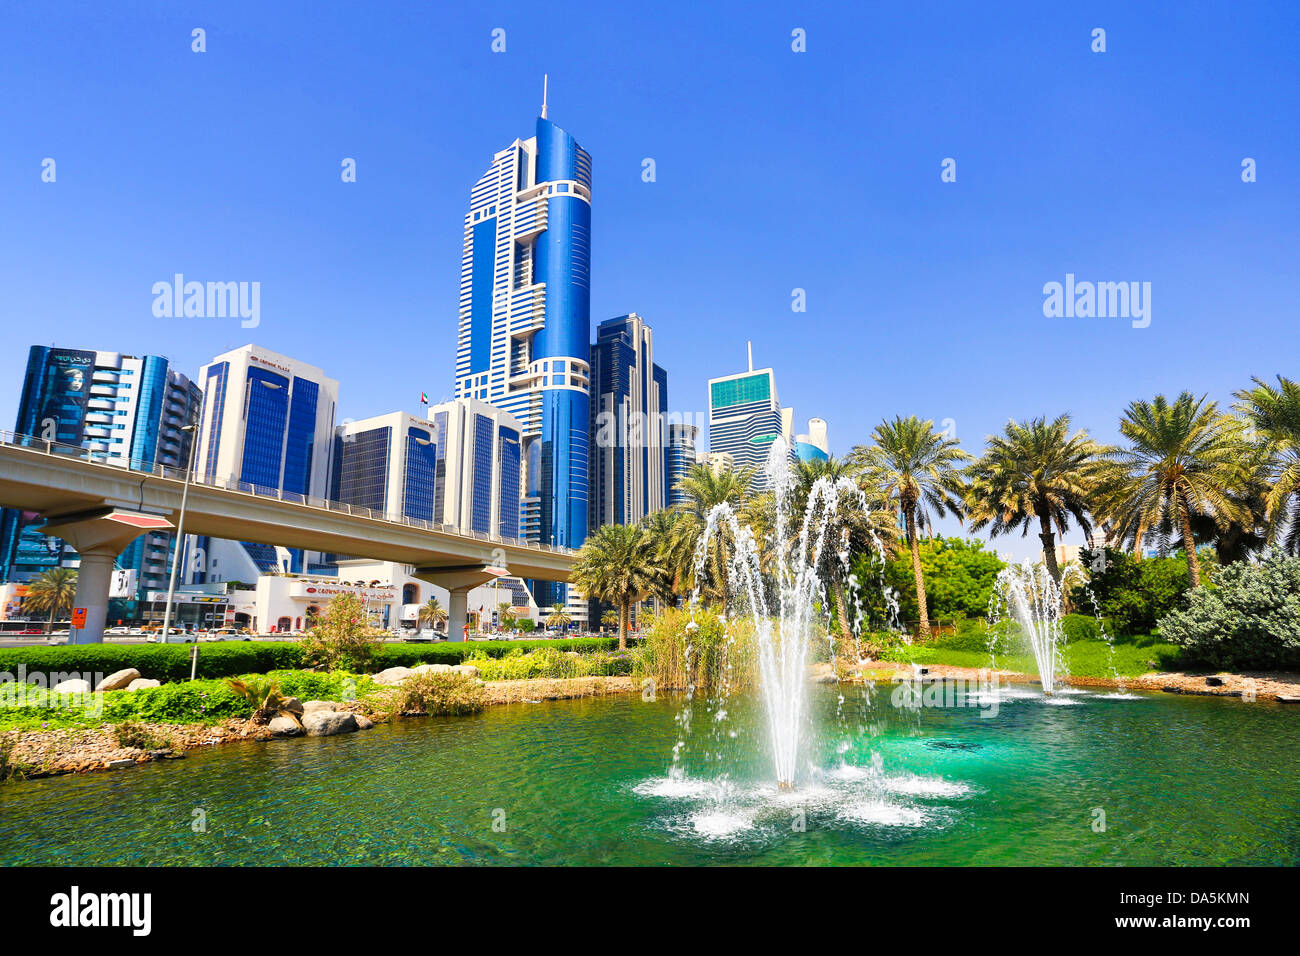 United Arab Emirates, UAE, Dubai, City, buildings, Sheikh Zayed, Road, Dubai, architecture, blue, downtown, emirates, fountain, Stock Photo